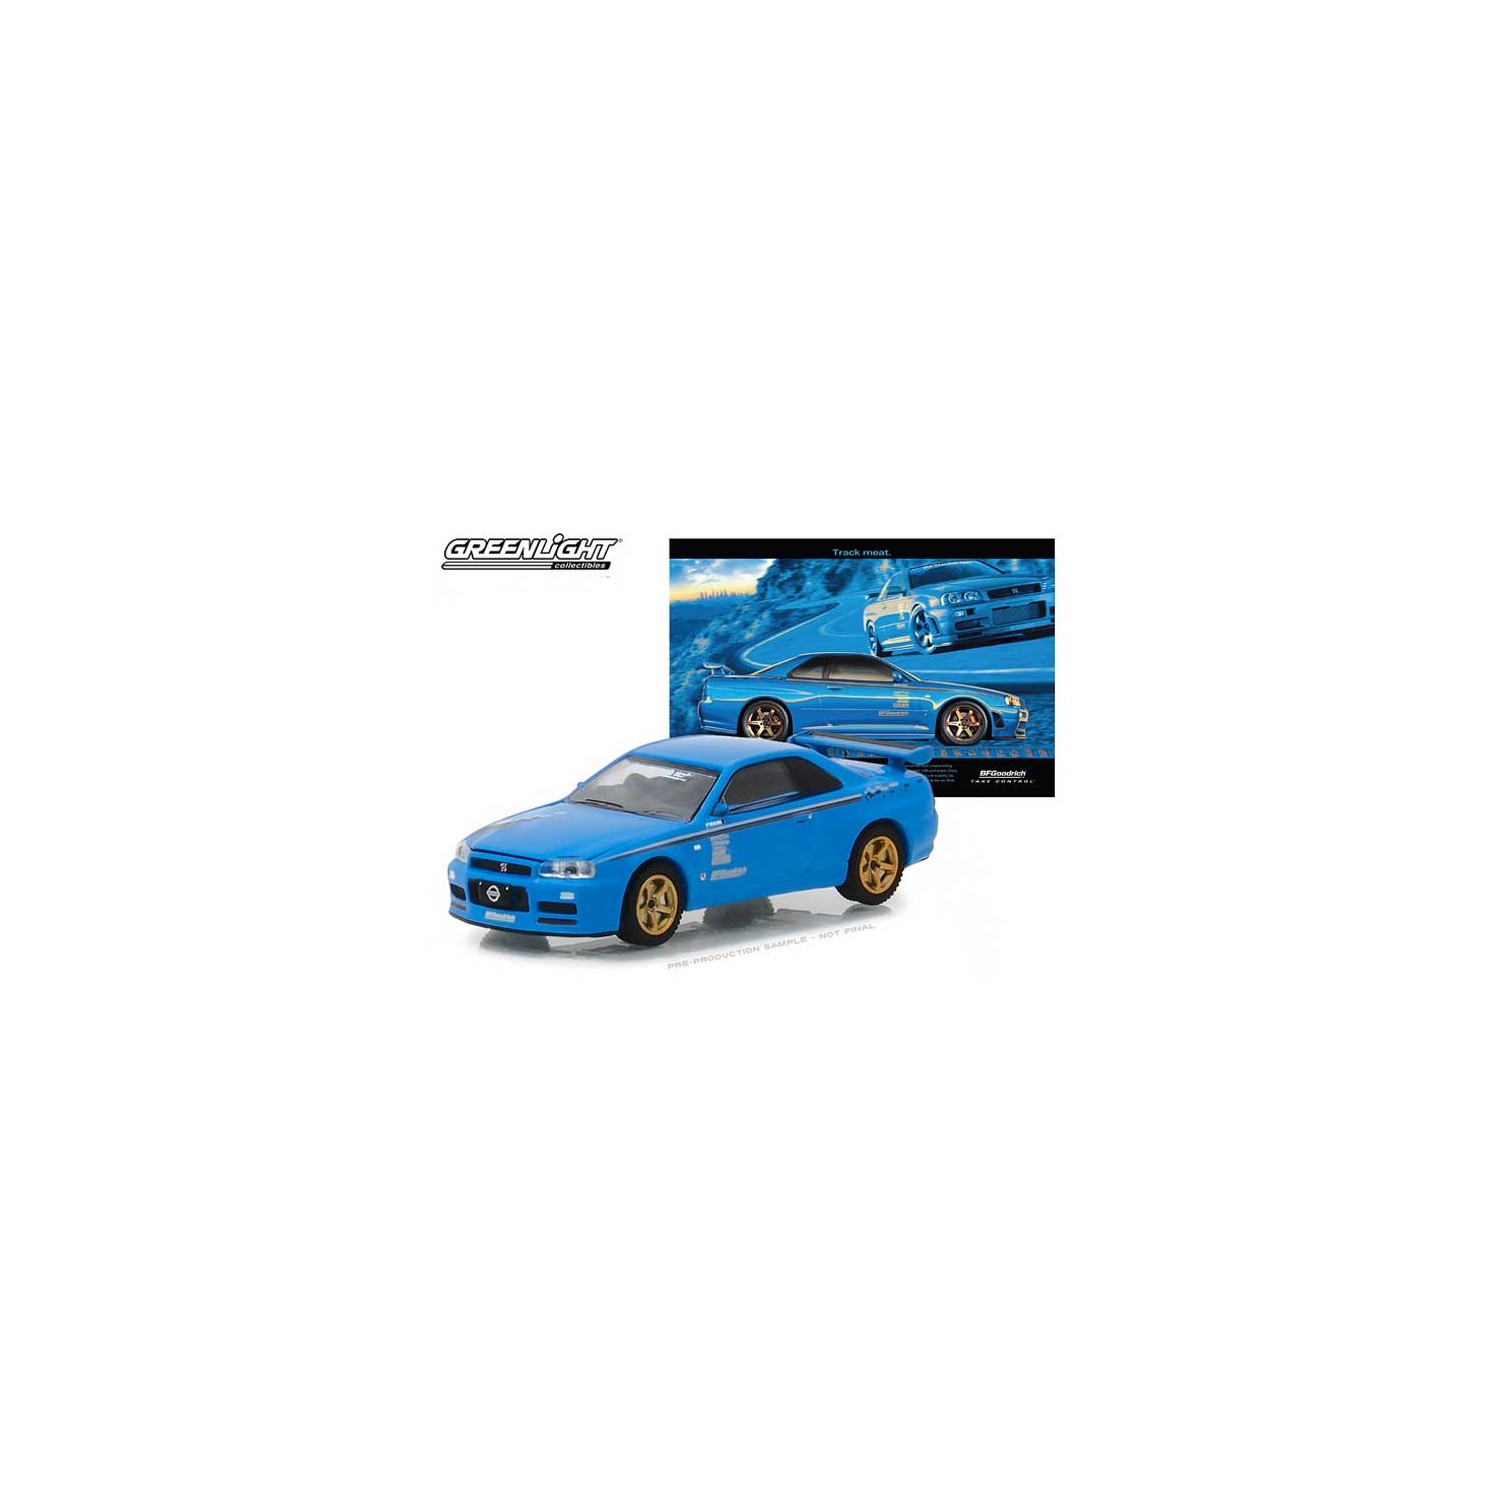 Greenlight 29944 BFGOODRICH Vintage AD Cars 2001 Nissan Skyline Gt-r R34 1/64 BL for sale online 